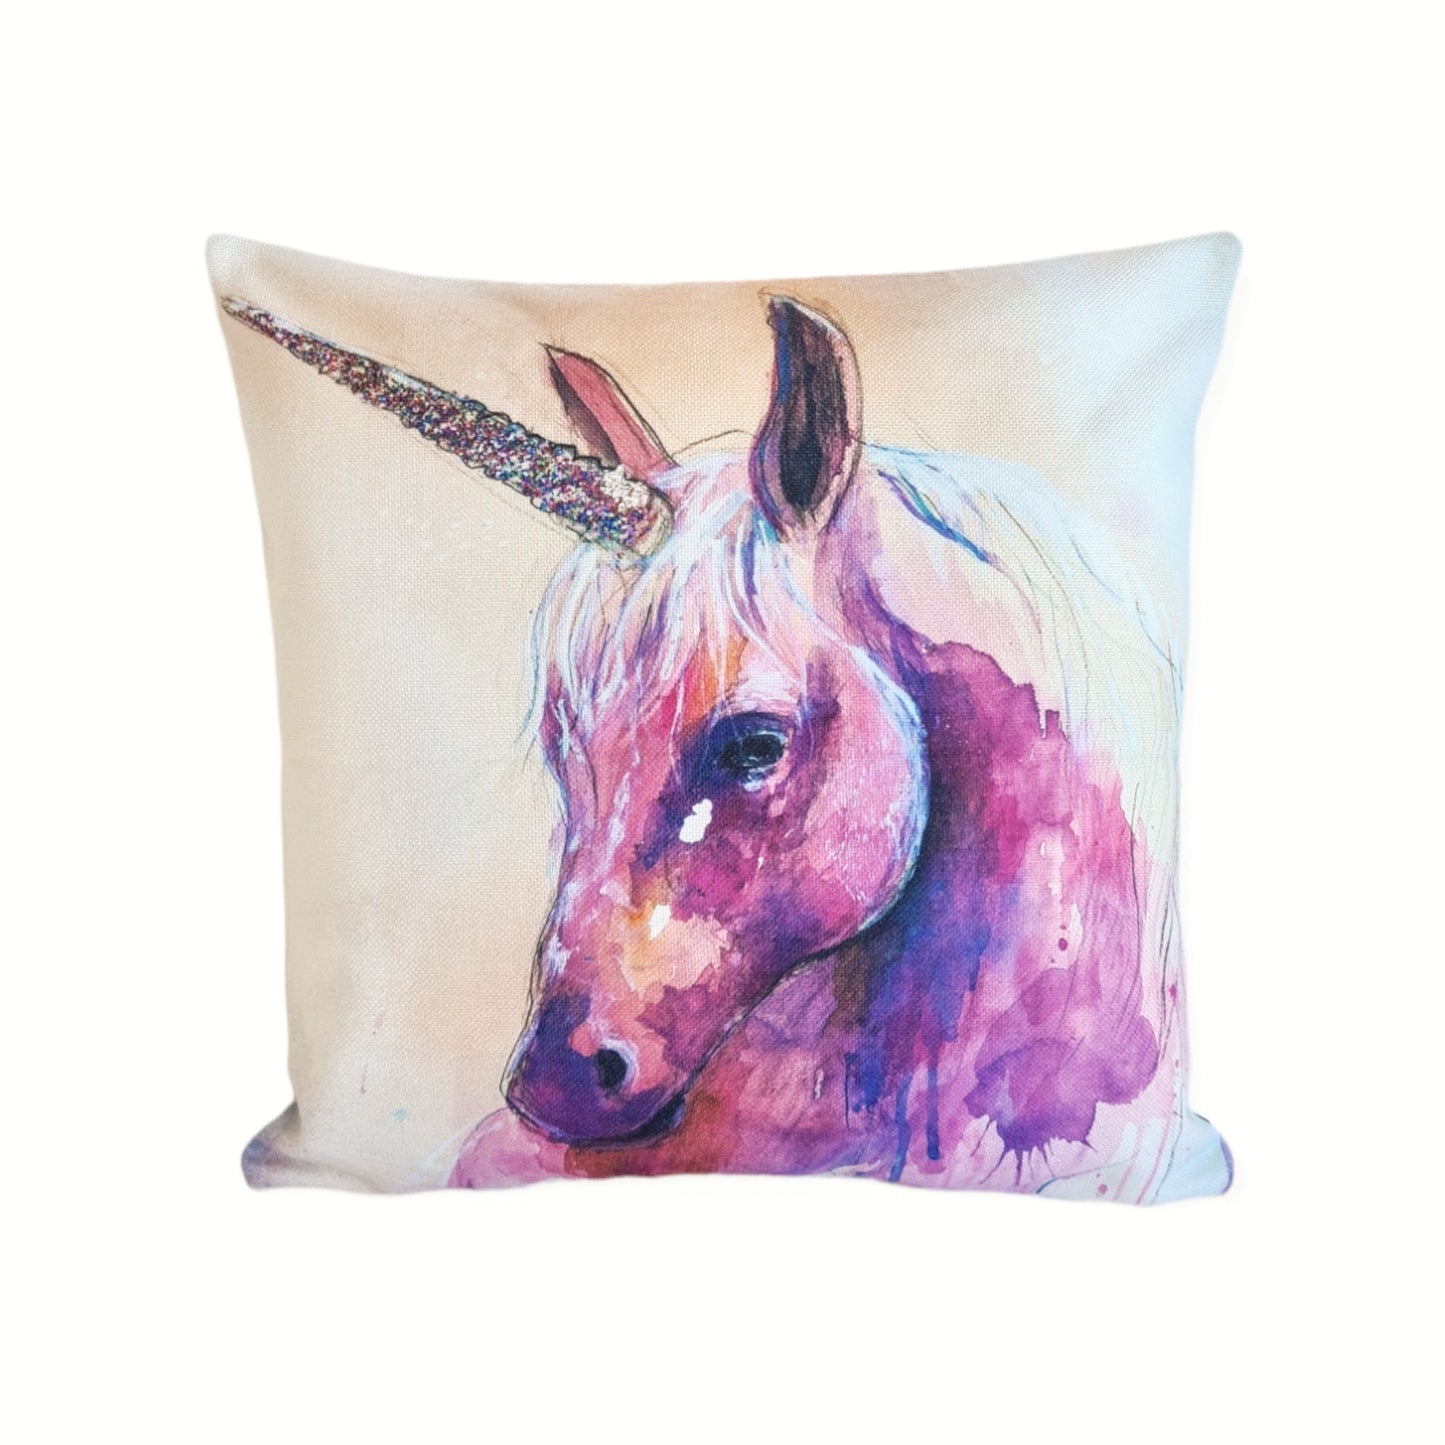 Unicorn Cushion Cover